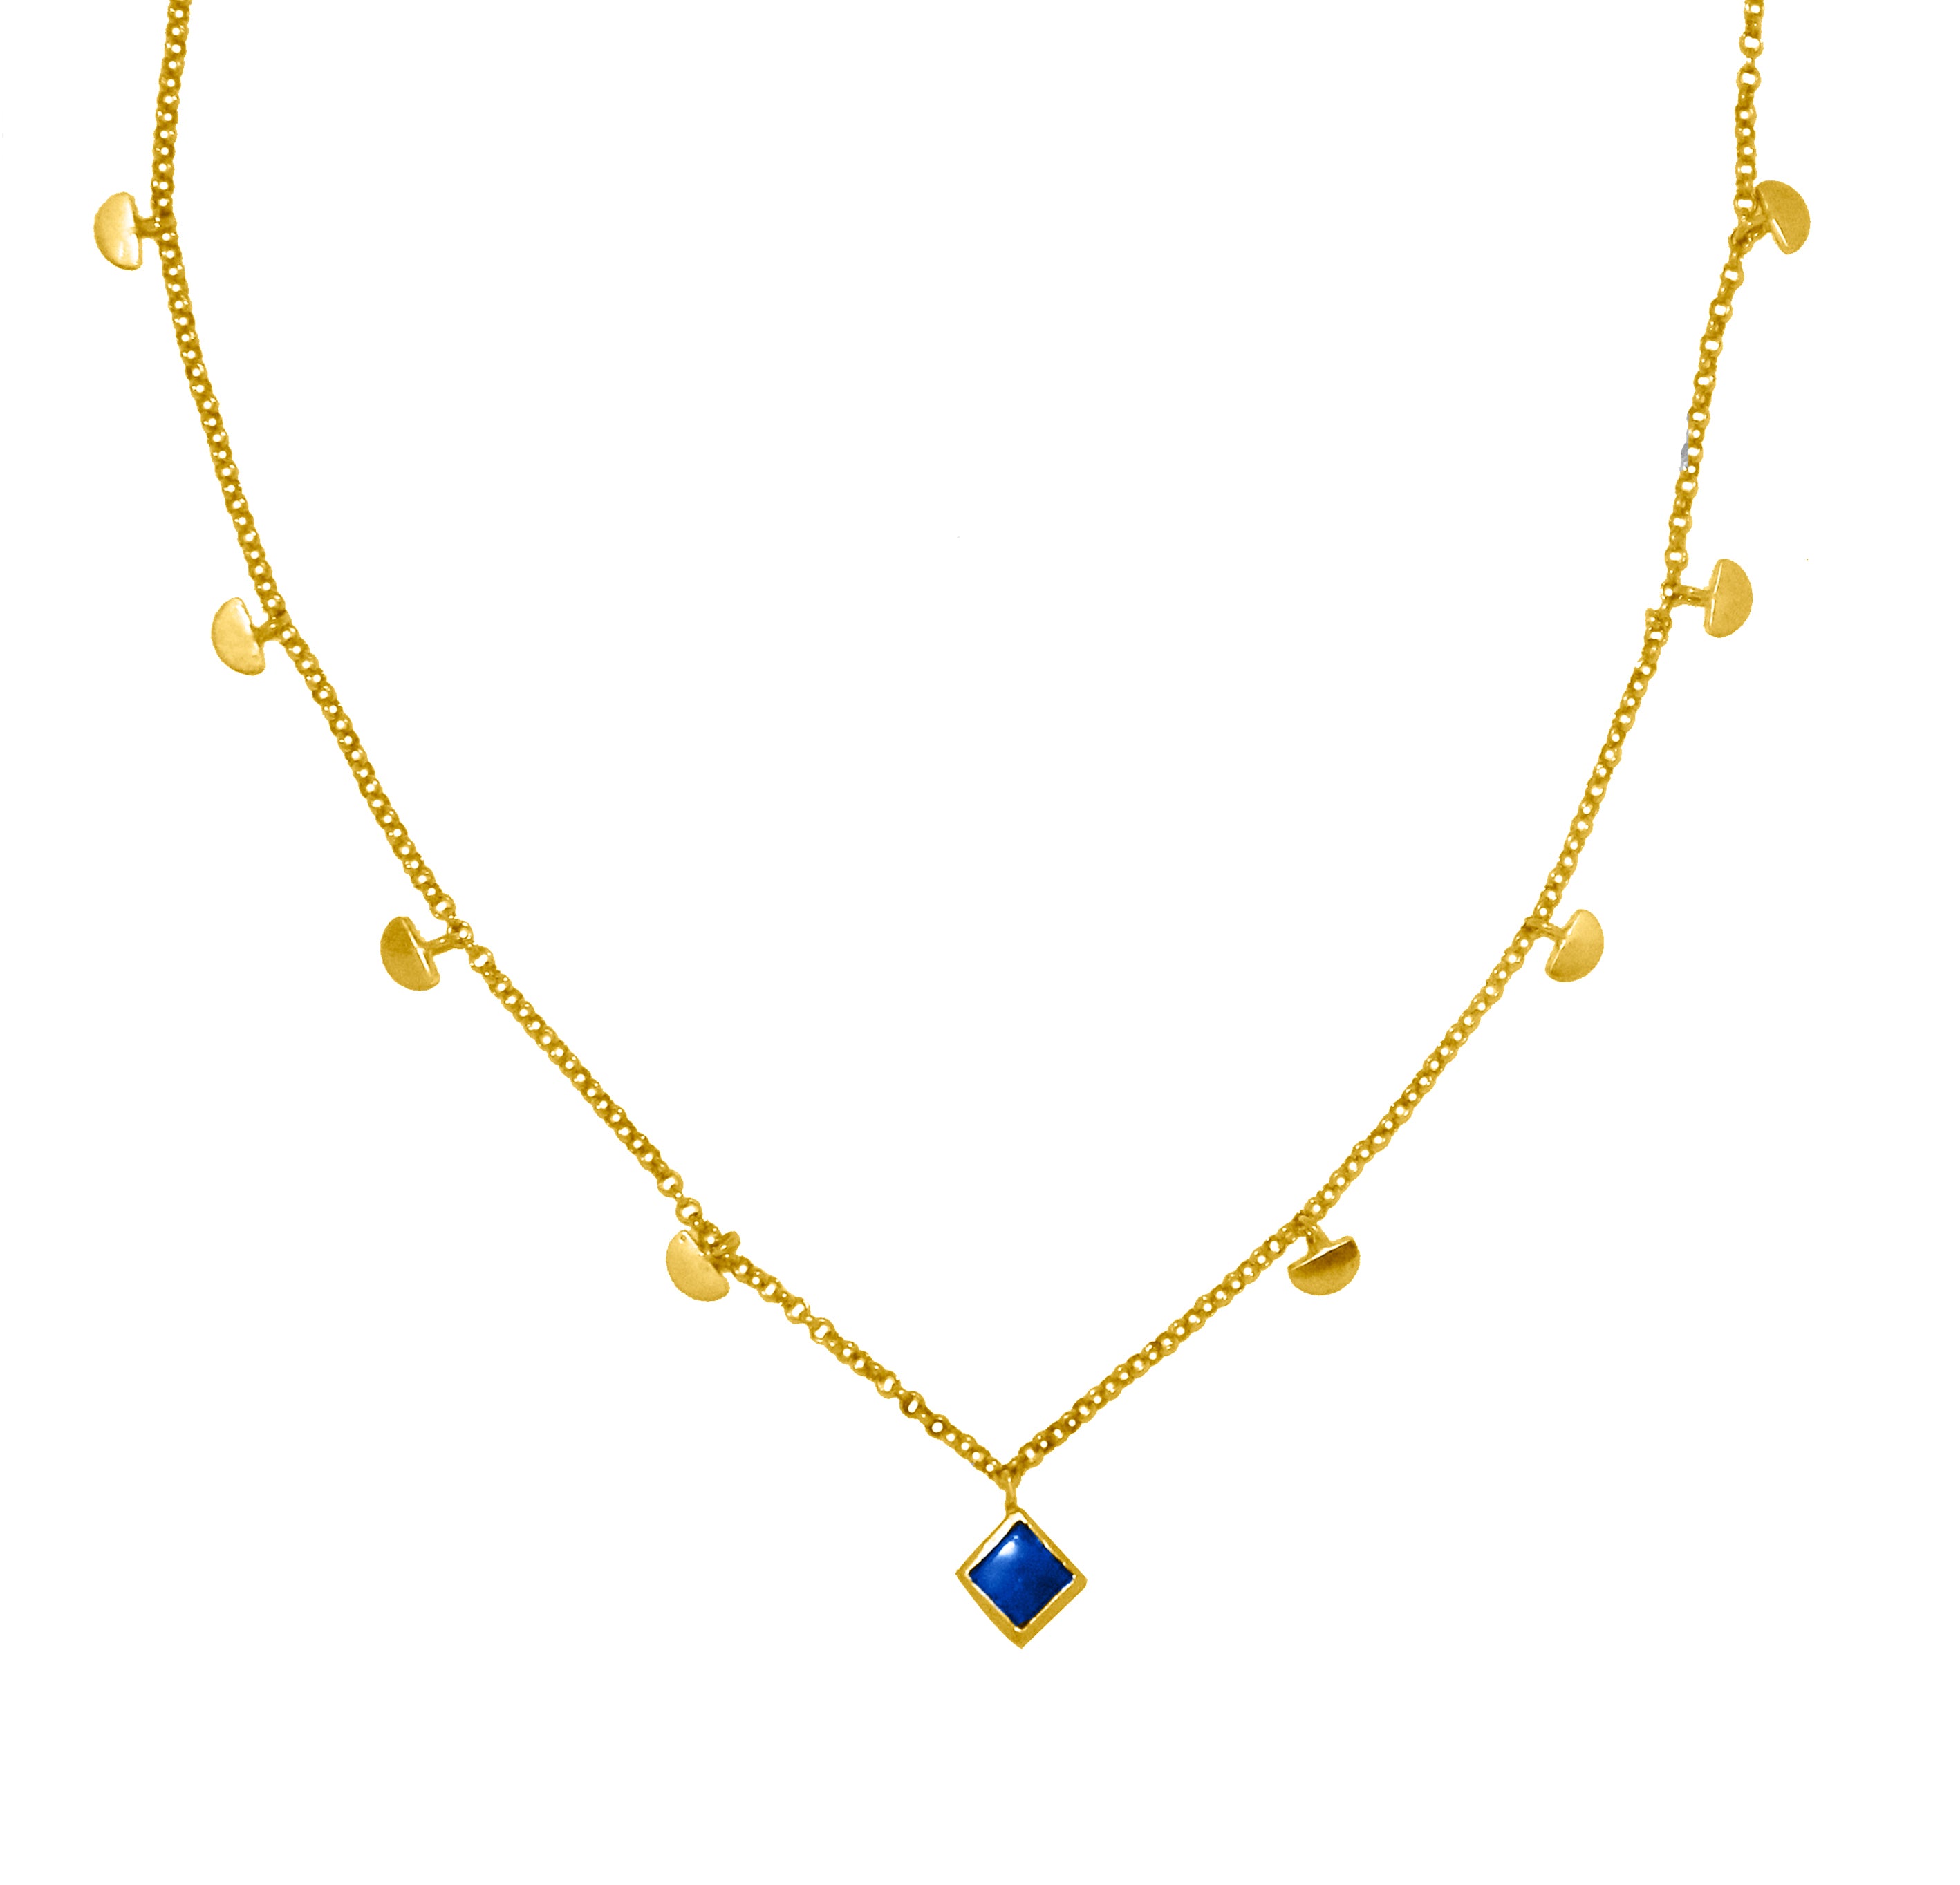 Jewelry Choker Necklace gold silver lapislazuli handmade inca blu chain joias ouro prata colar artesanal gioielli collana oro argento